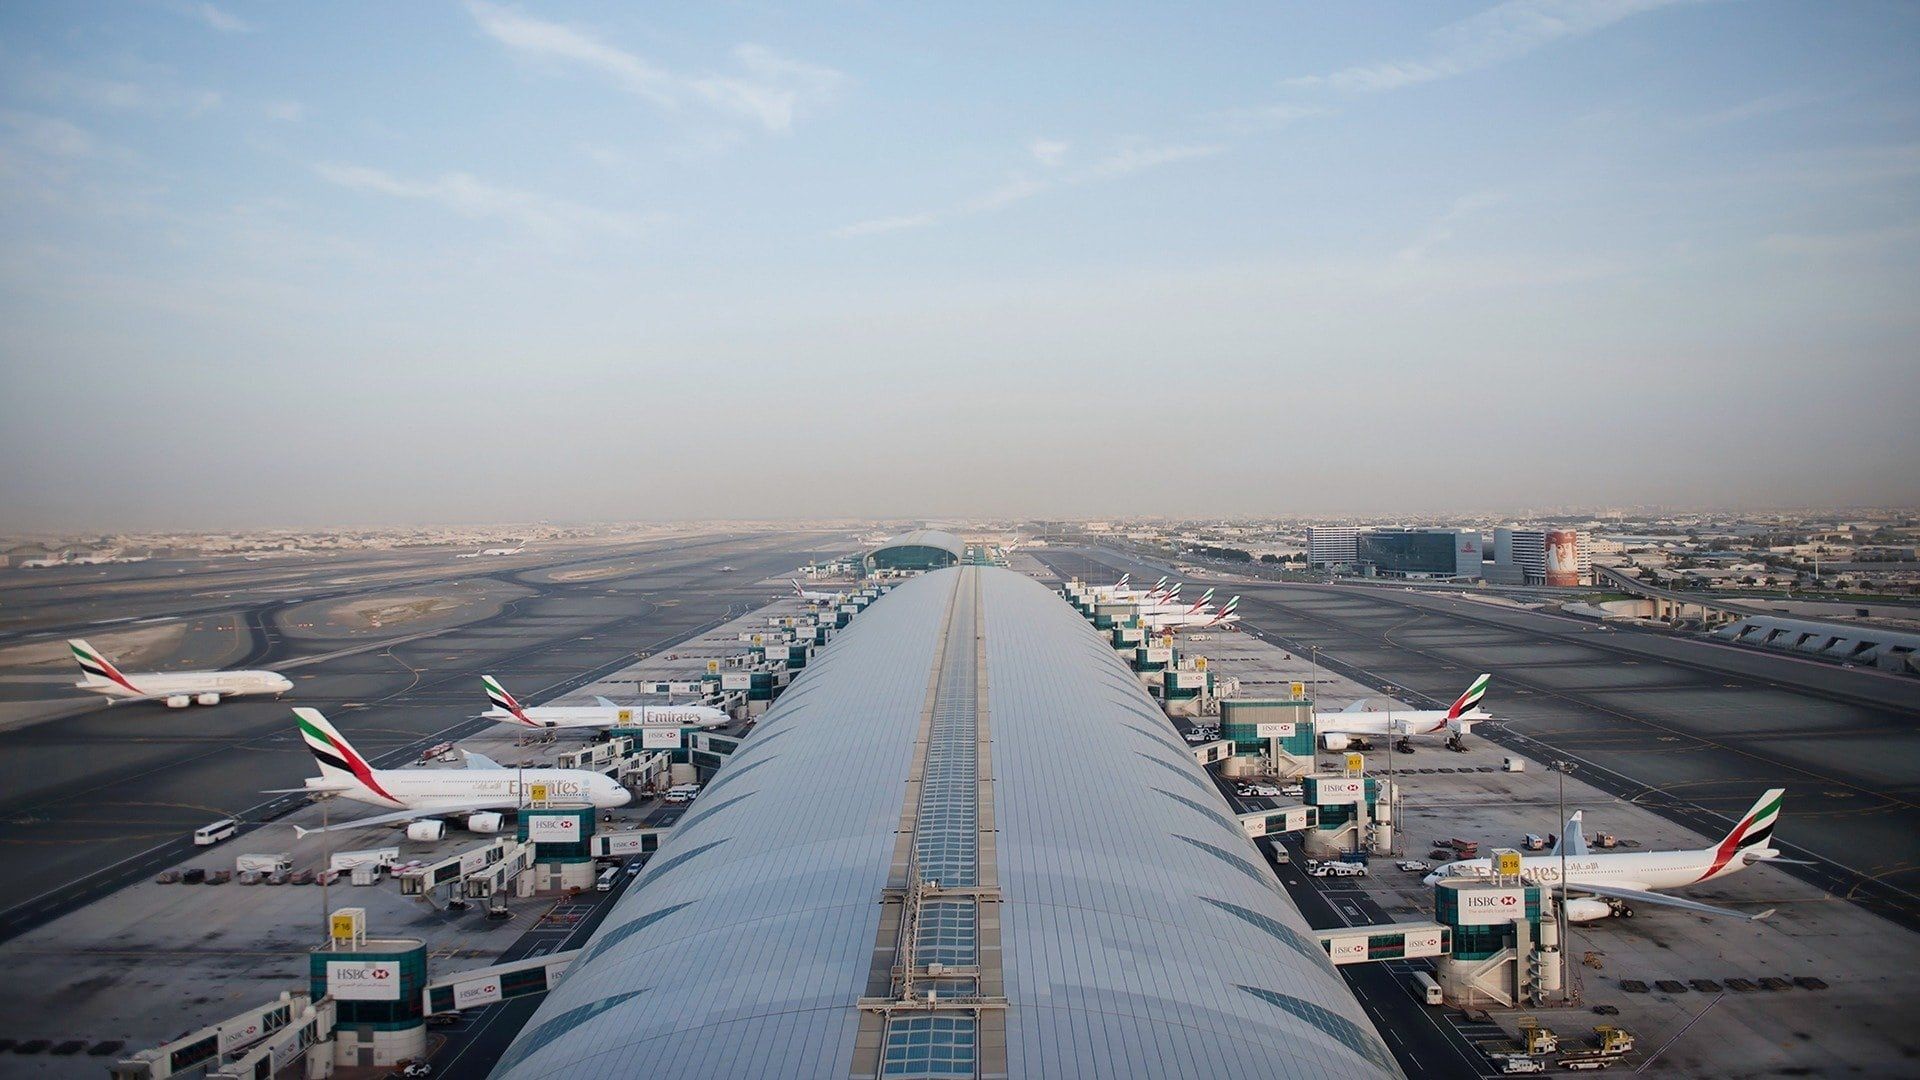 Ultimate Airport Dubai background